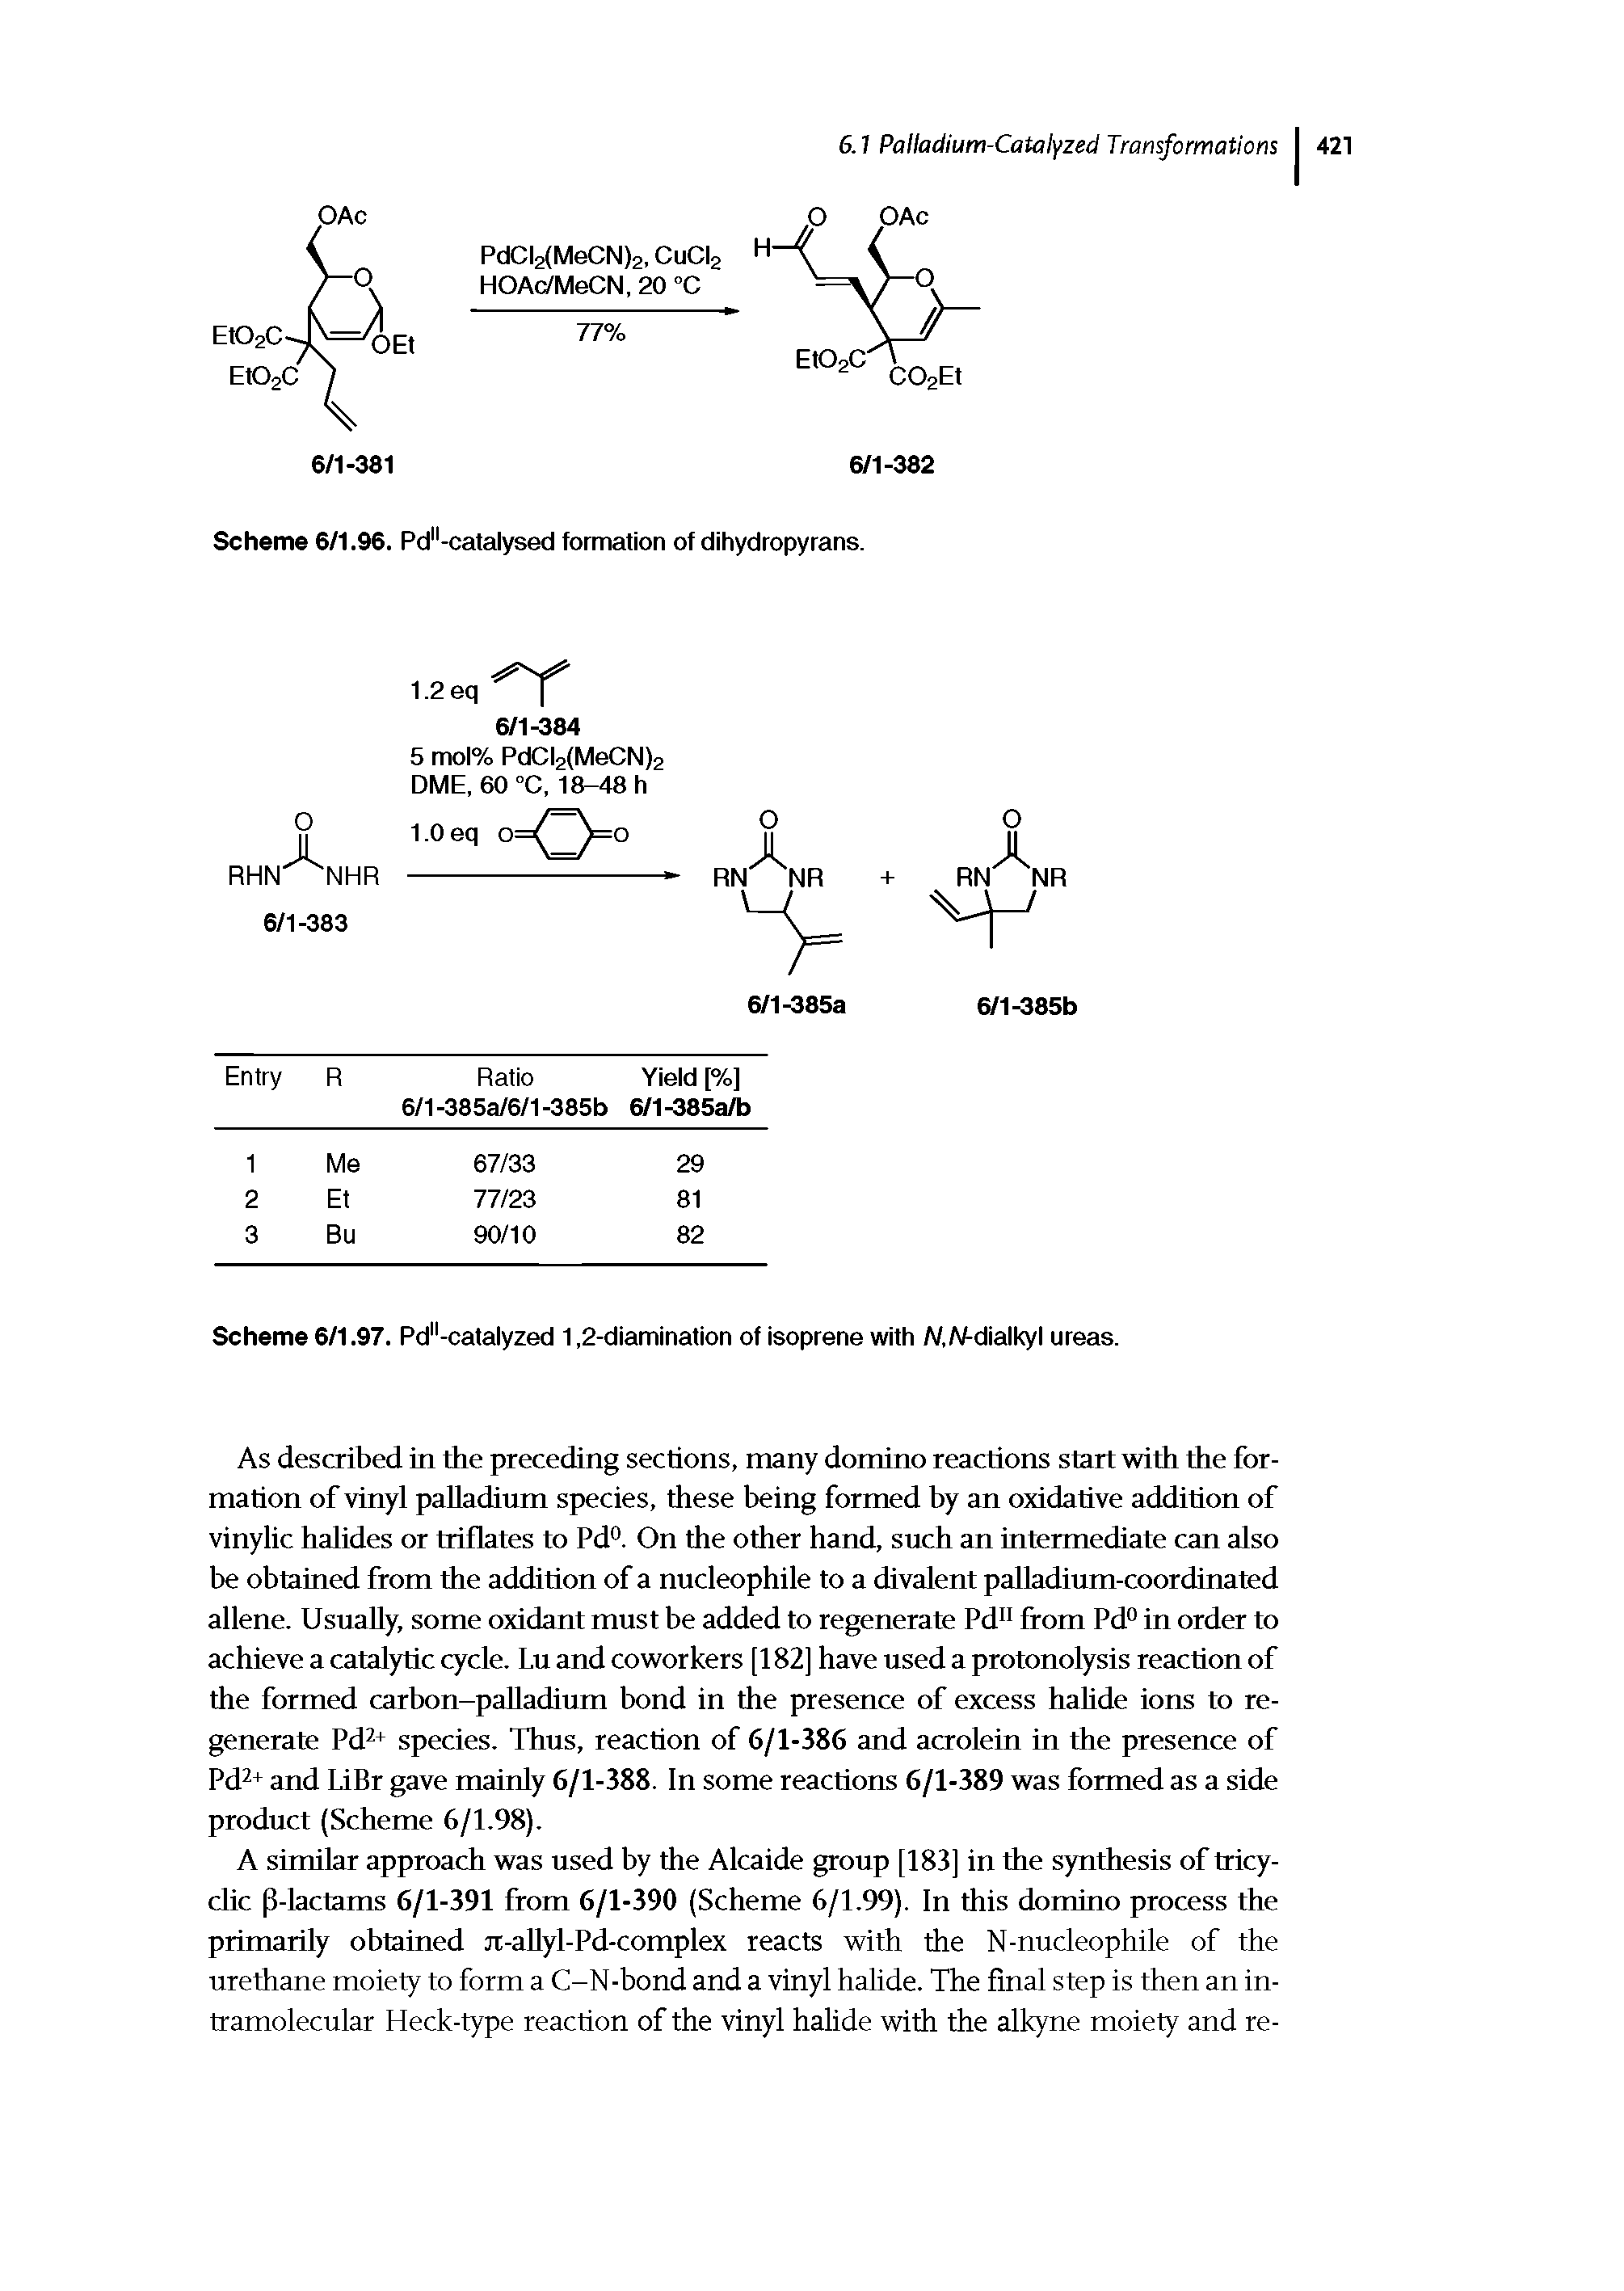 Scheme 6/1.97. Pd"-catalyzed 1,2-diamination of isoprene with N.N-dialkyl ureas.